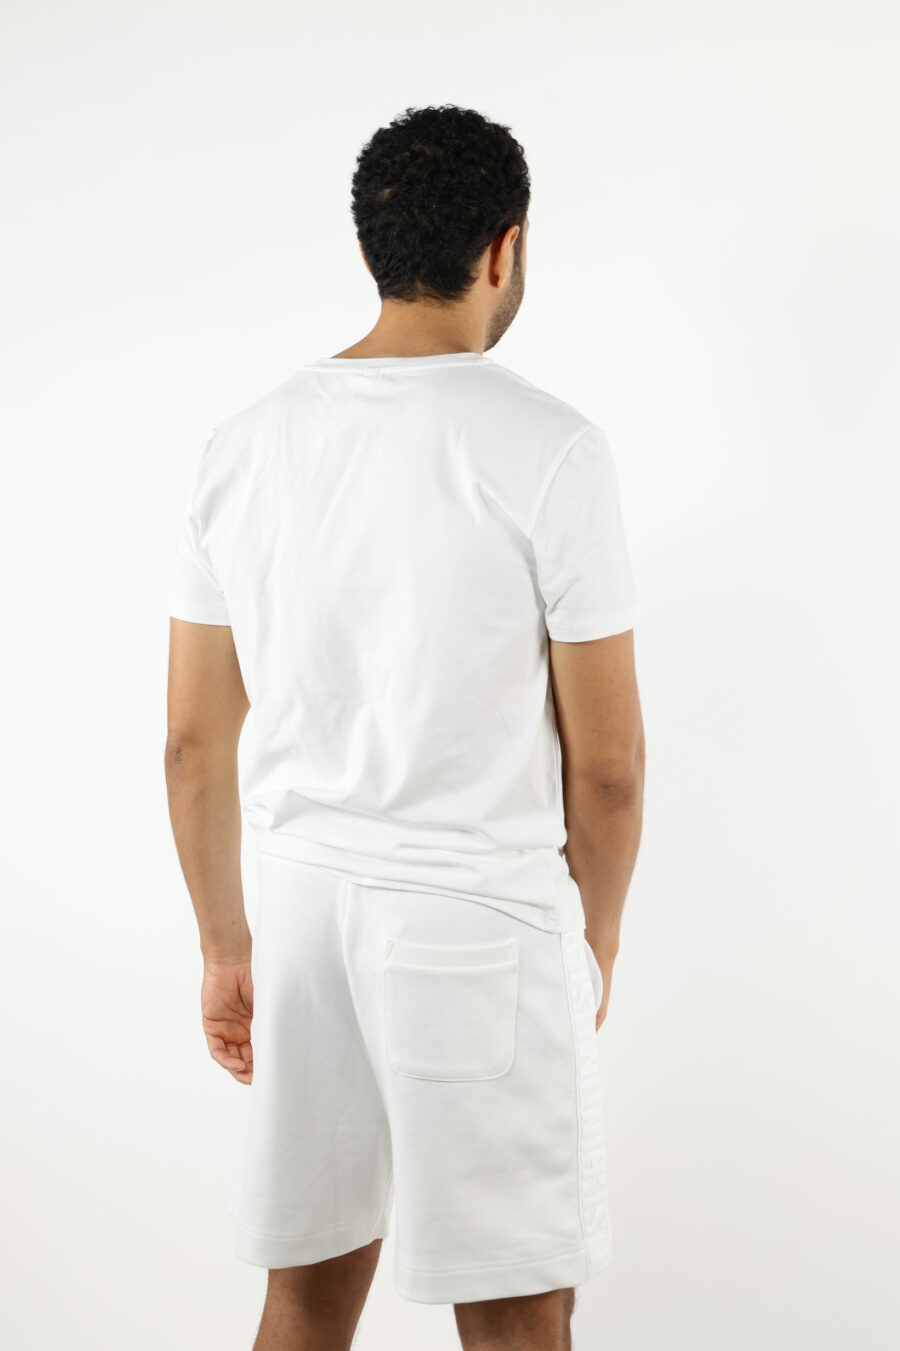 Camiseta blanca con minilogo "swim" - 111088